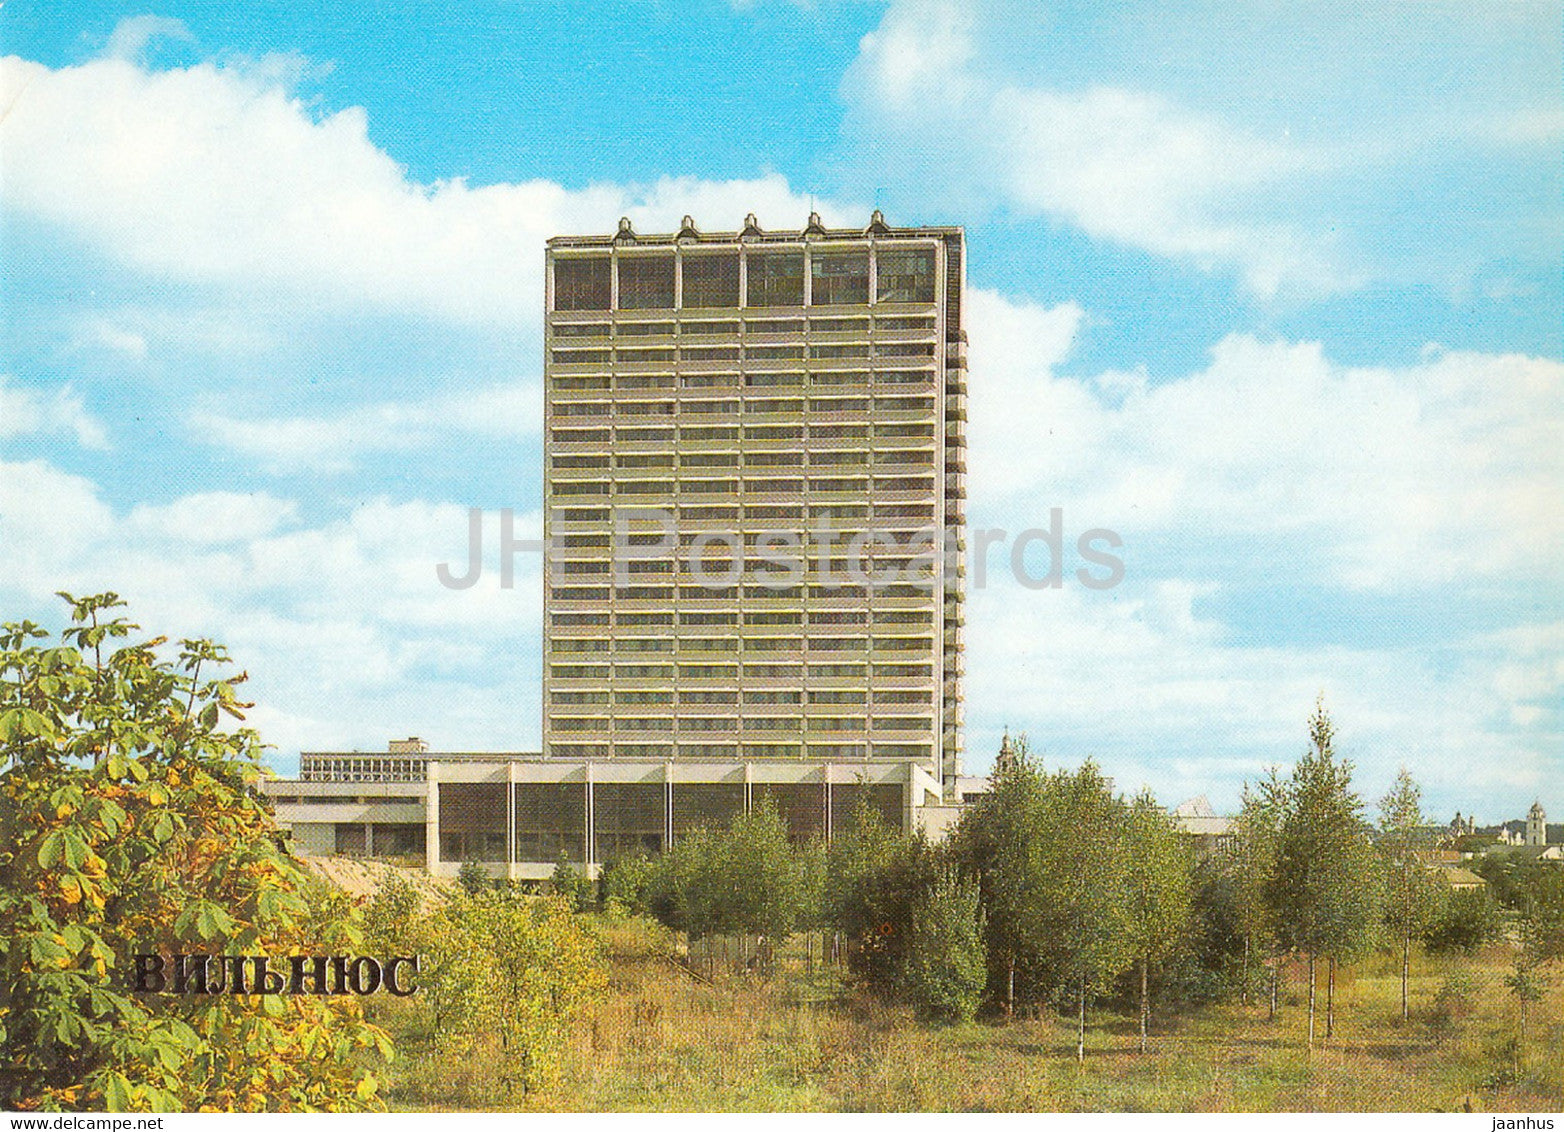 Vilnius - Lithuania hotel - 1984 - Lithuania USSR - unused - JH Postcards